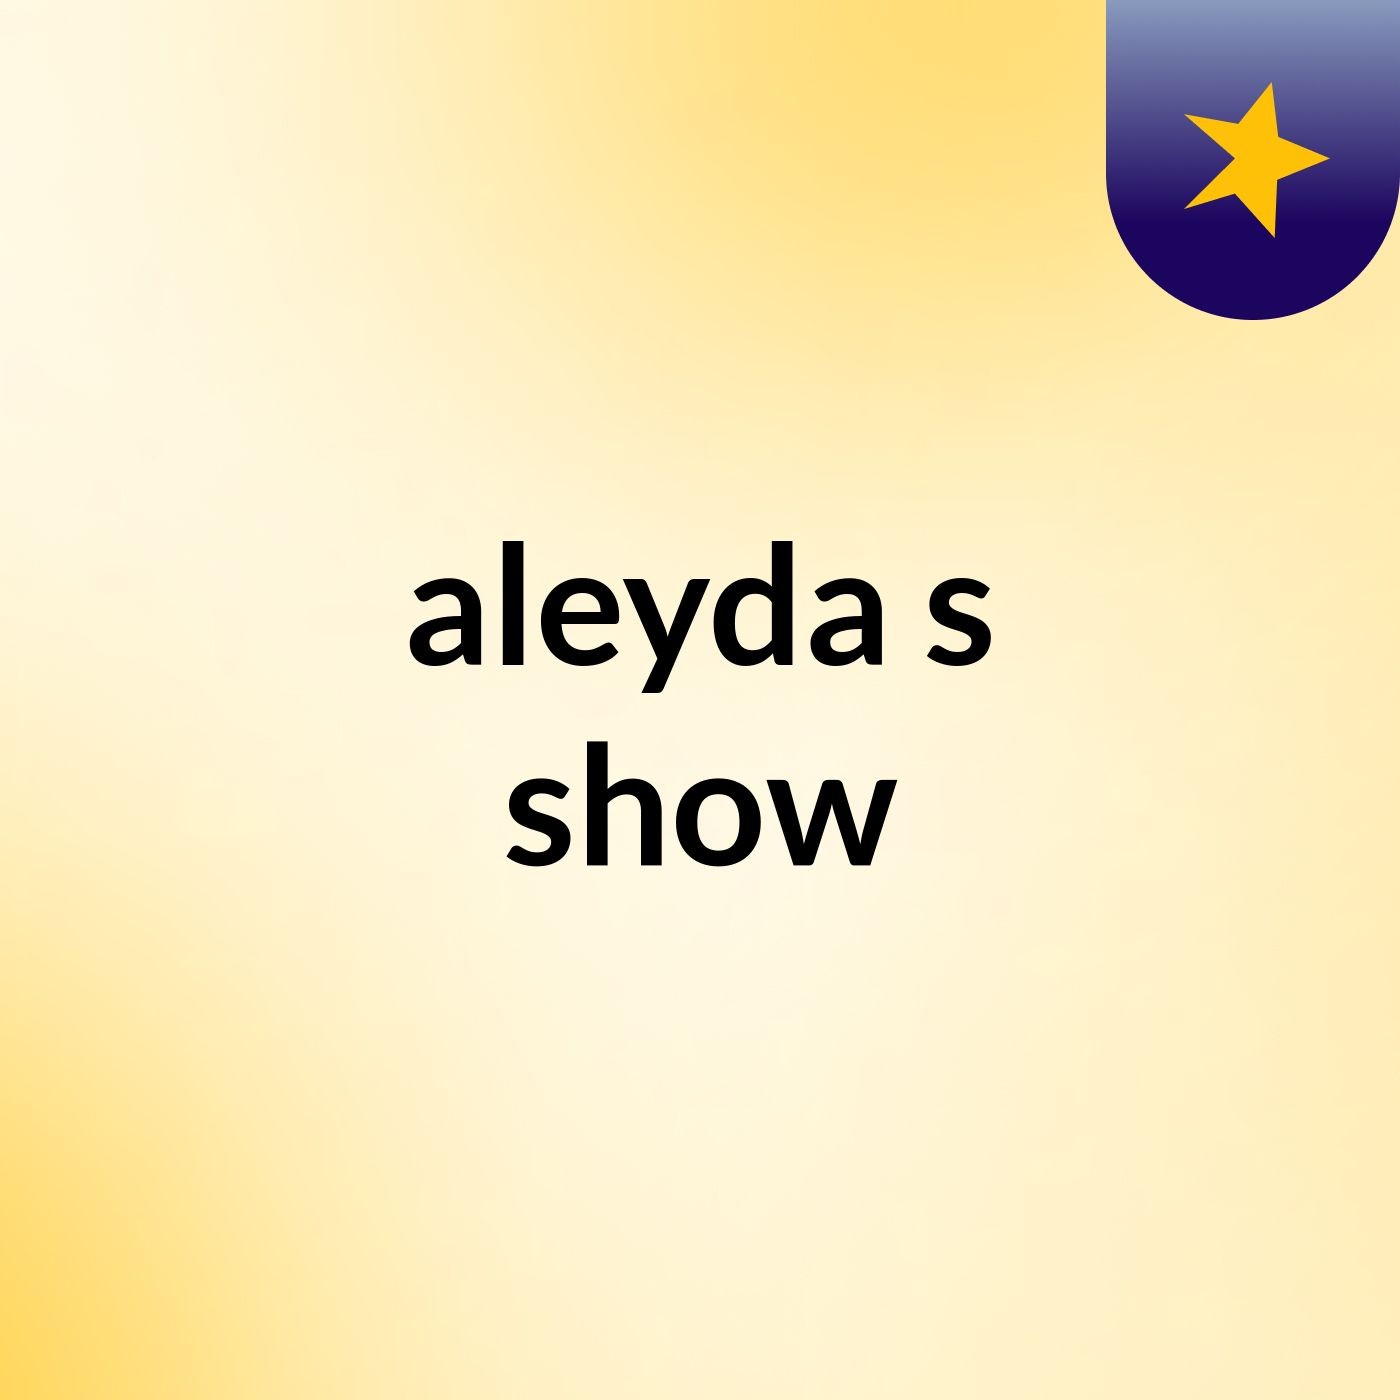 aleyda's show